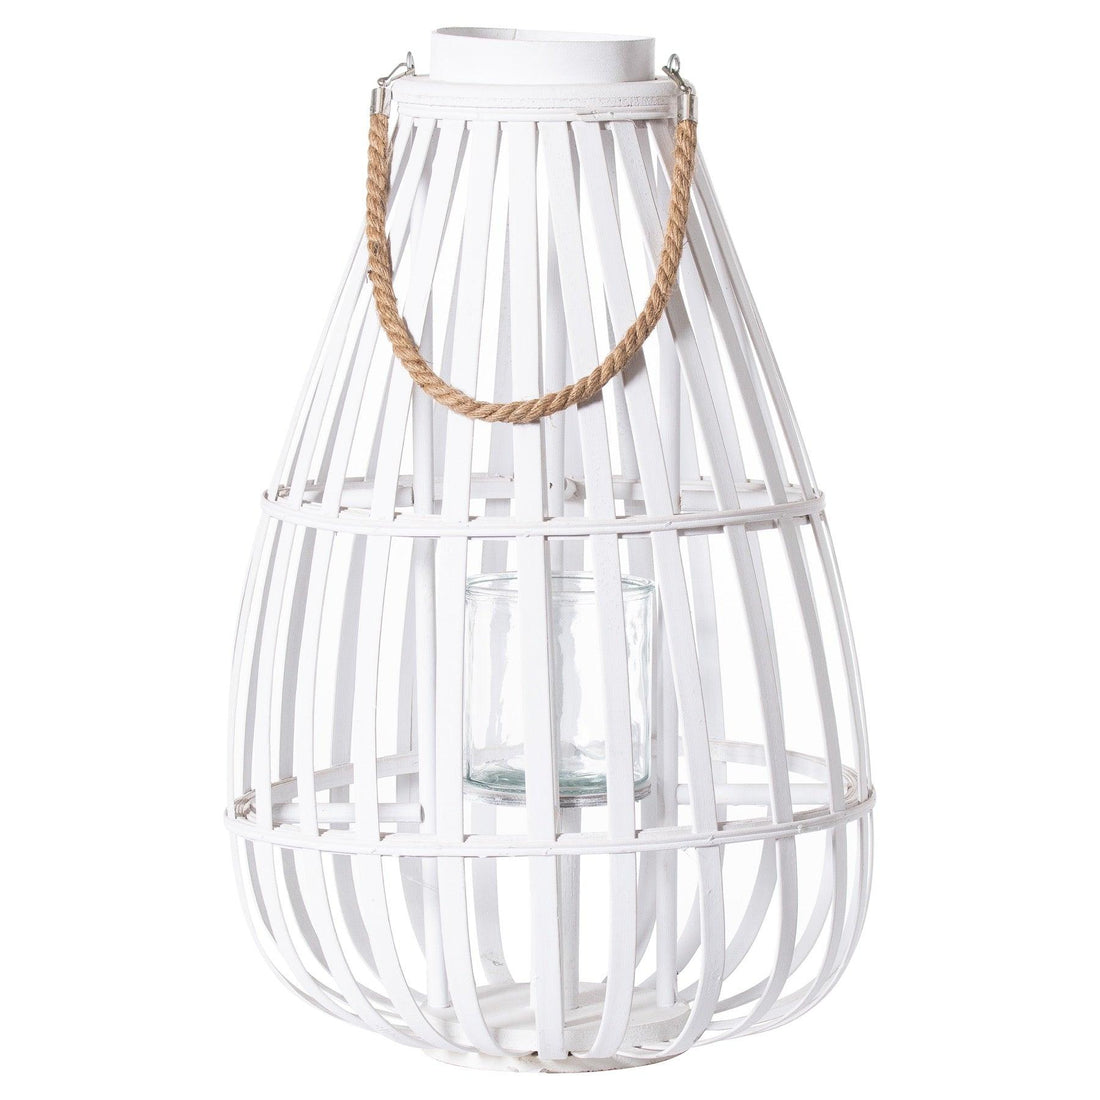 White Floor Standing Domed Wicker Lantern With Rope Detail - £99.95 - Lighting > Lanterns 